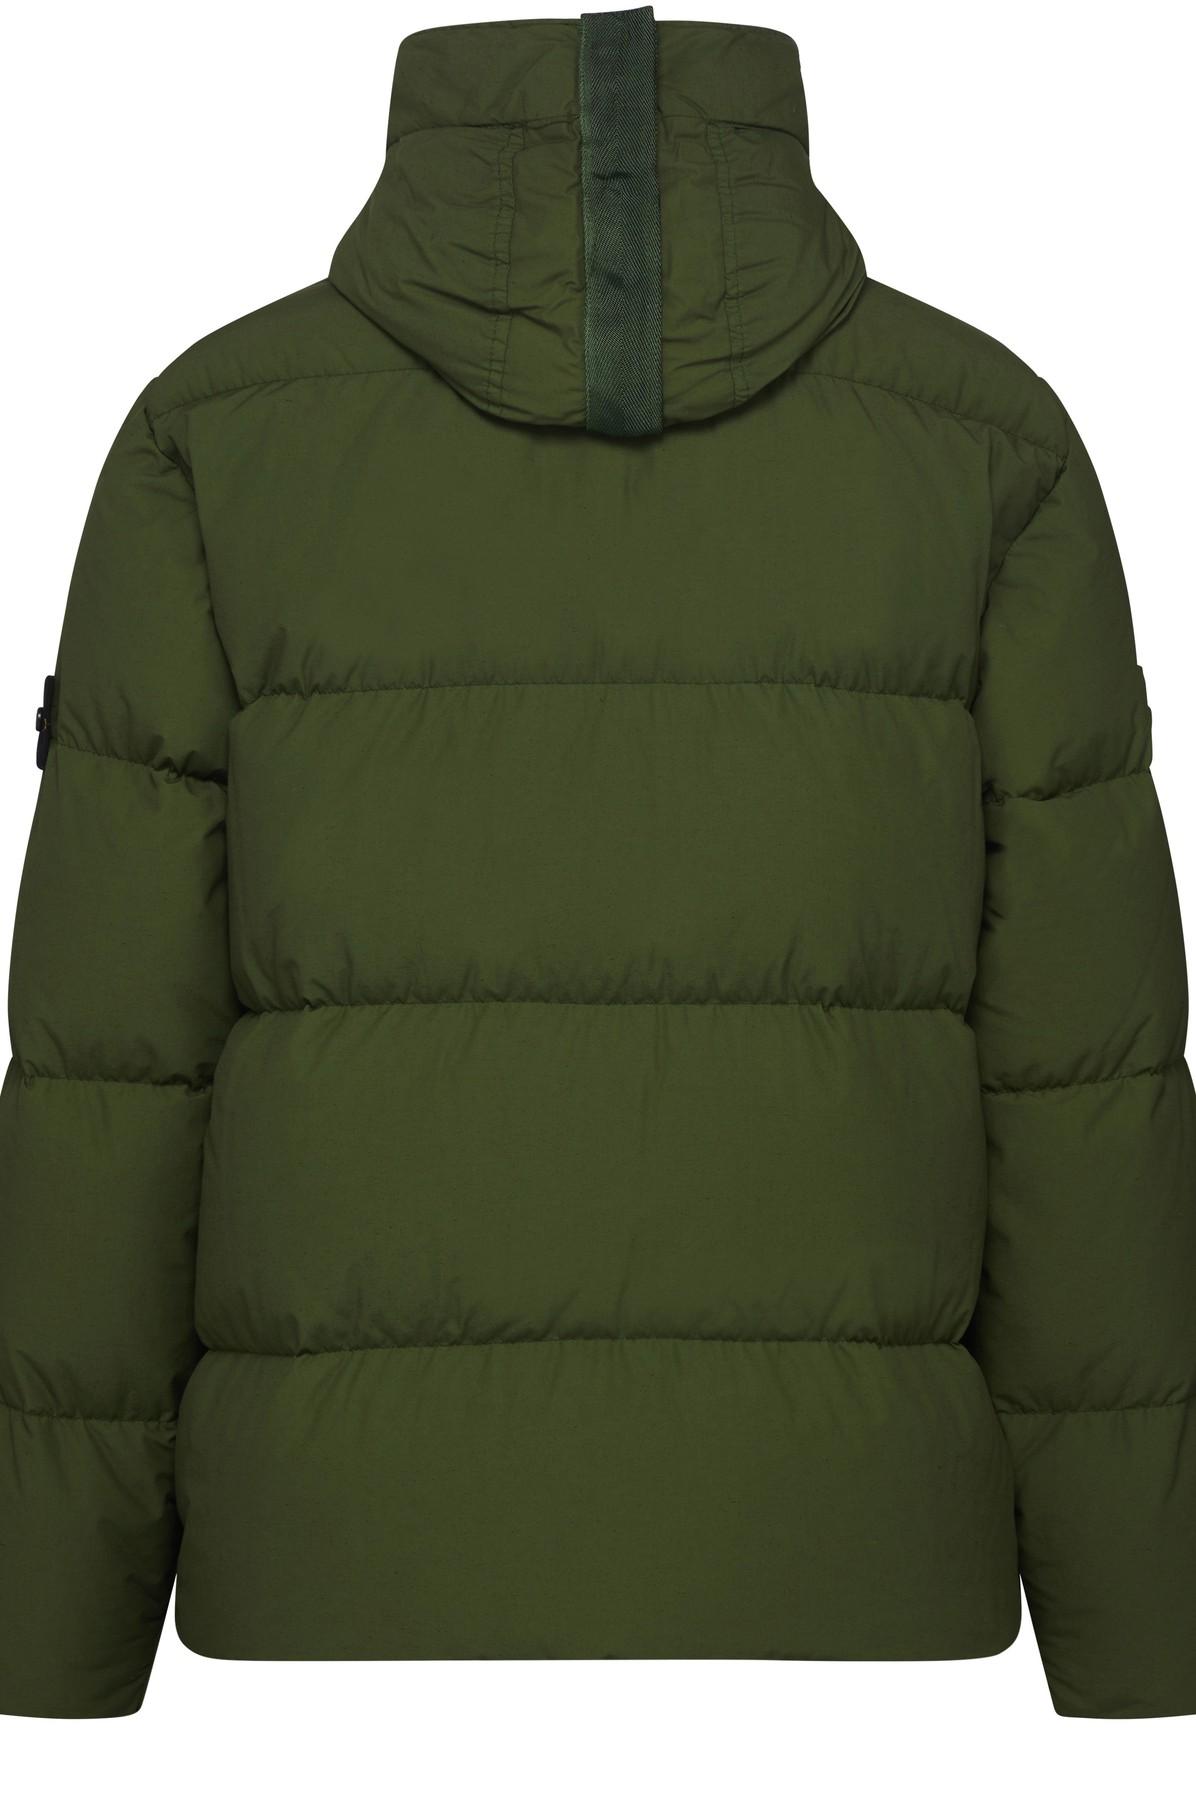 patroon zin atomair Stone Island Puffer Jacket in Green for Men | Lyst